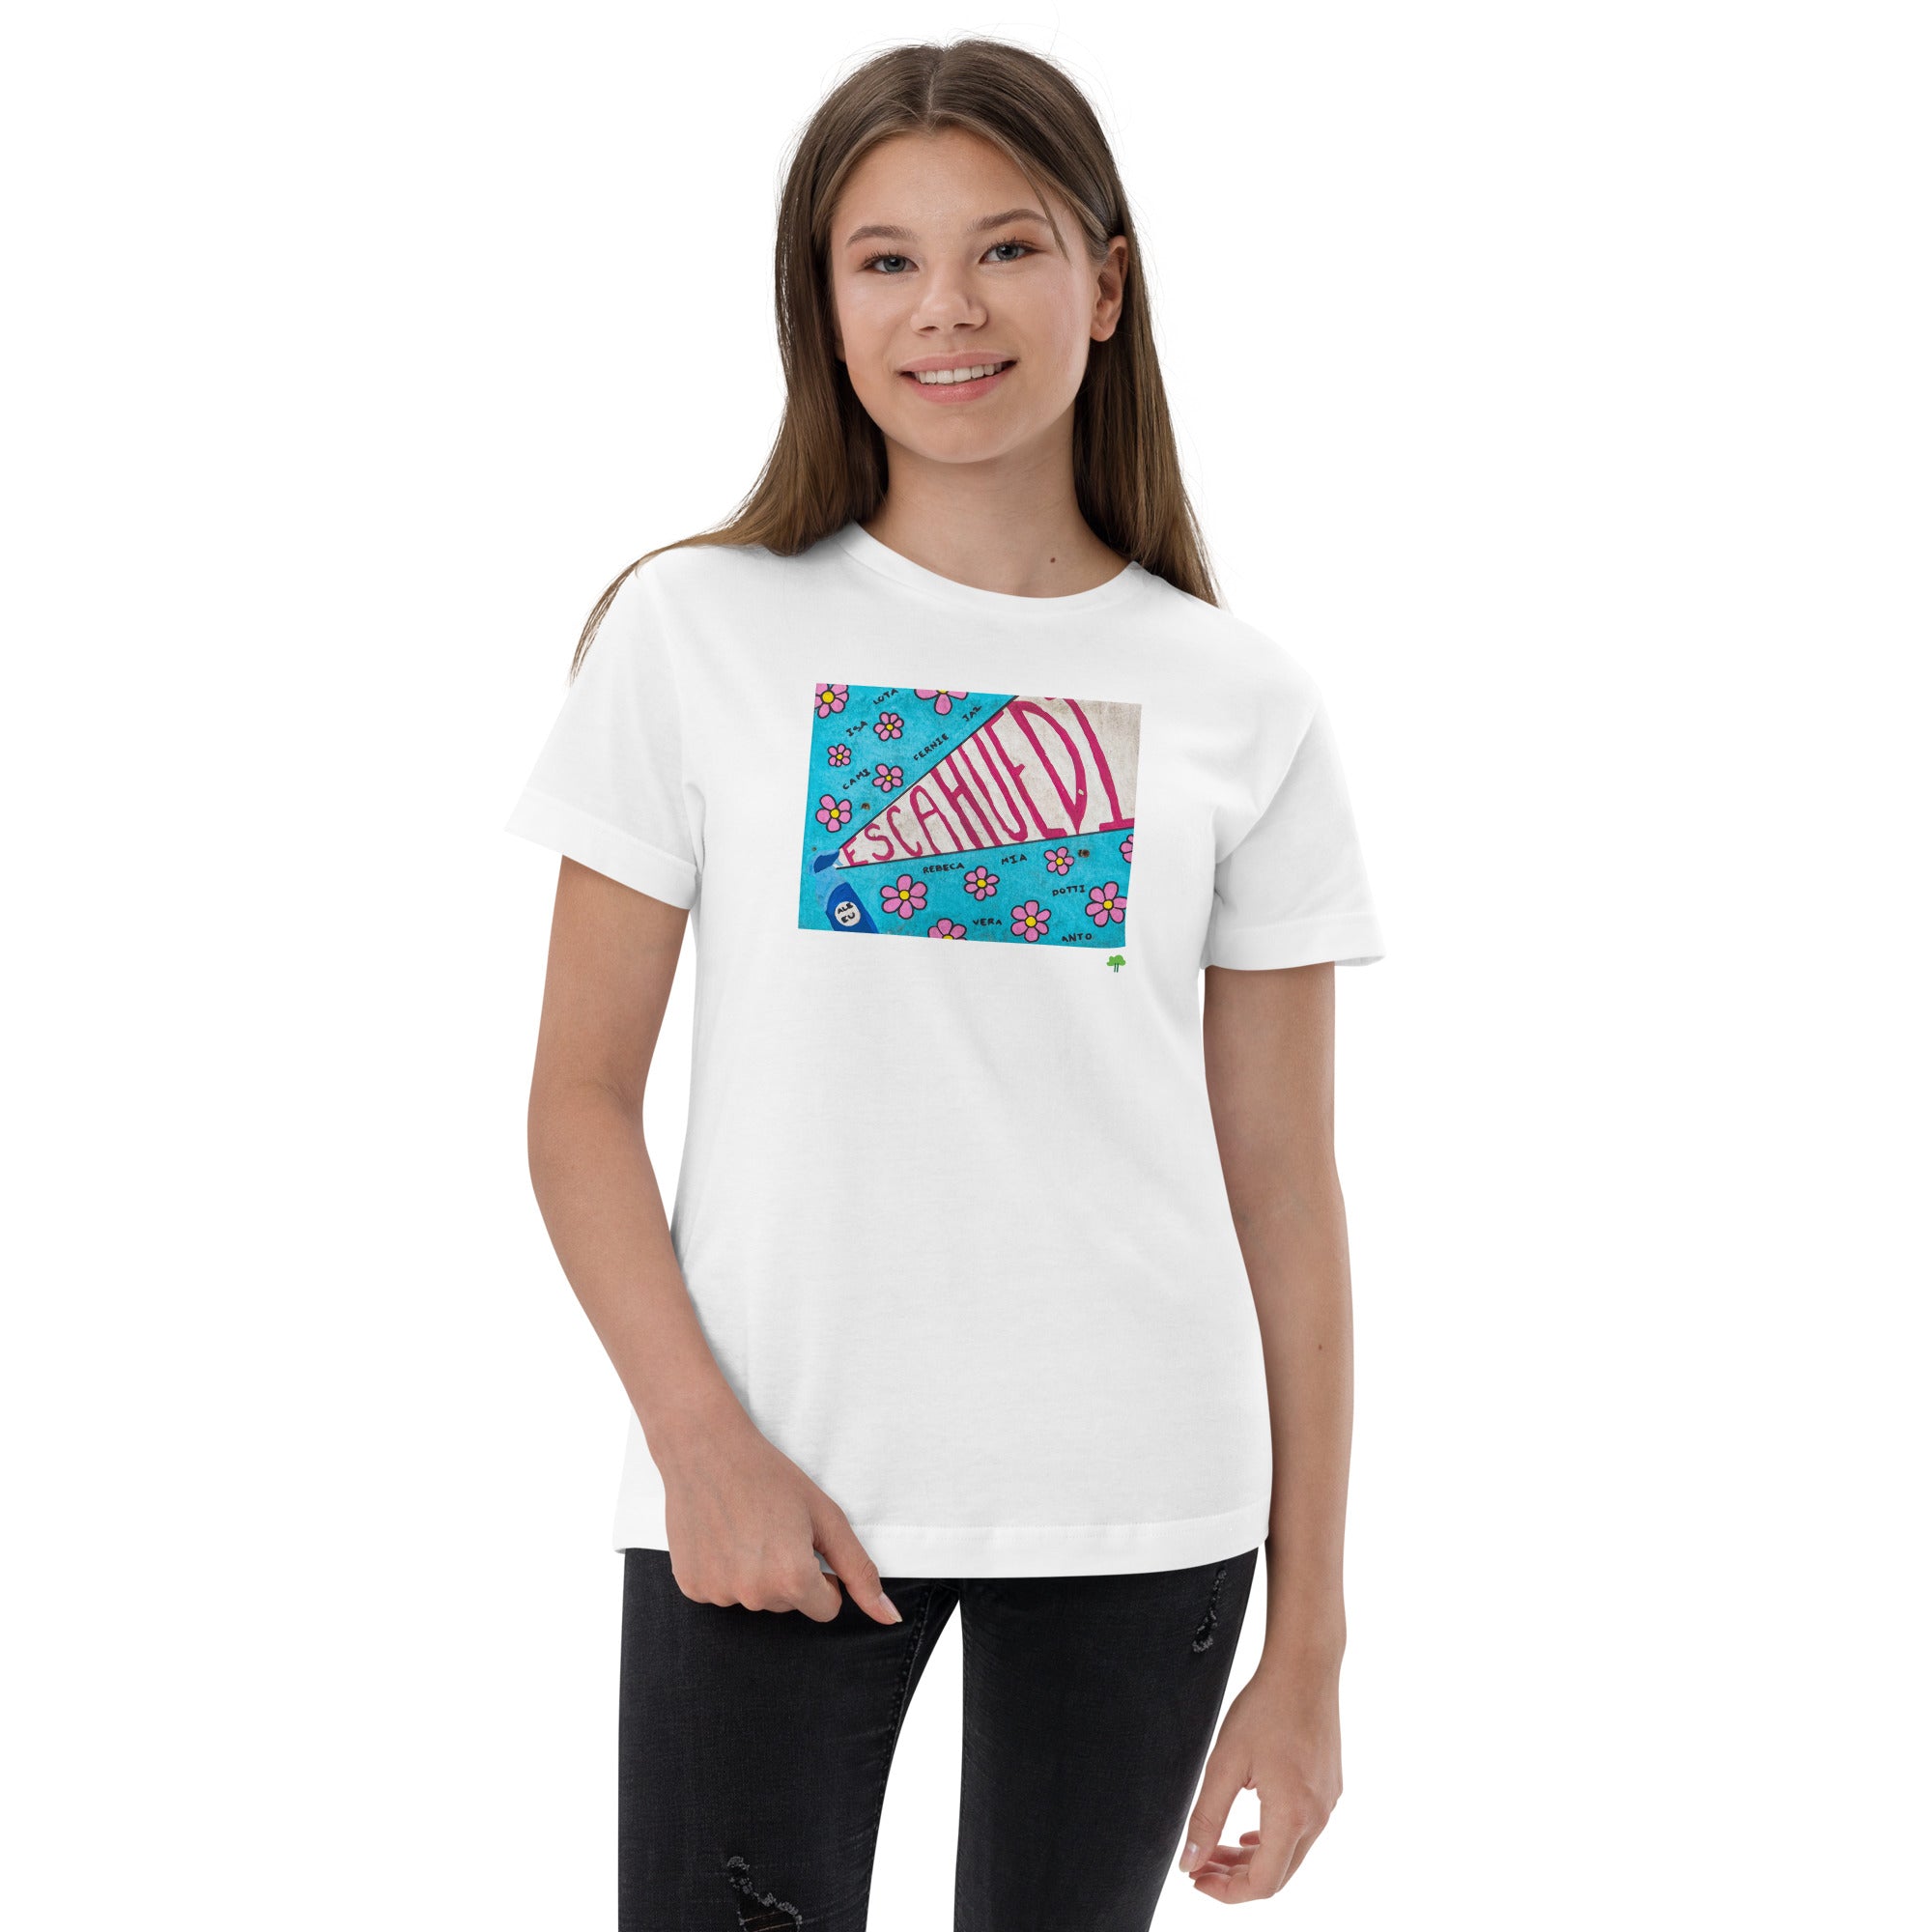 II Temp - Sabana - K4 | Youth jersey t-shirt